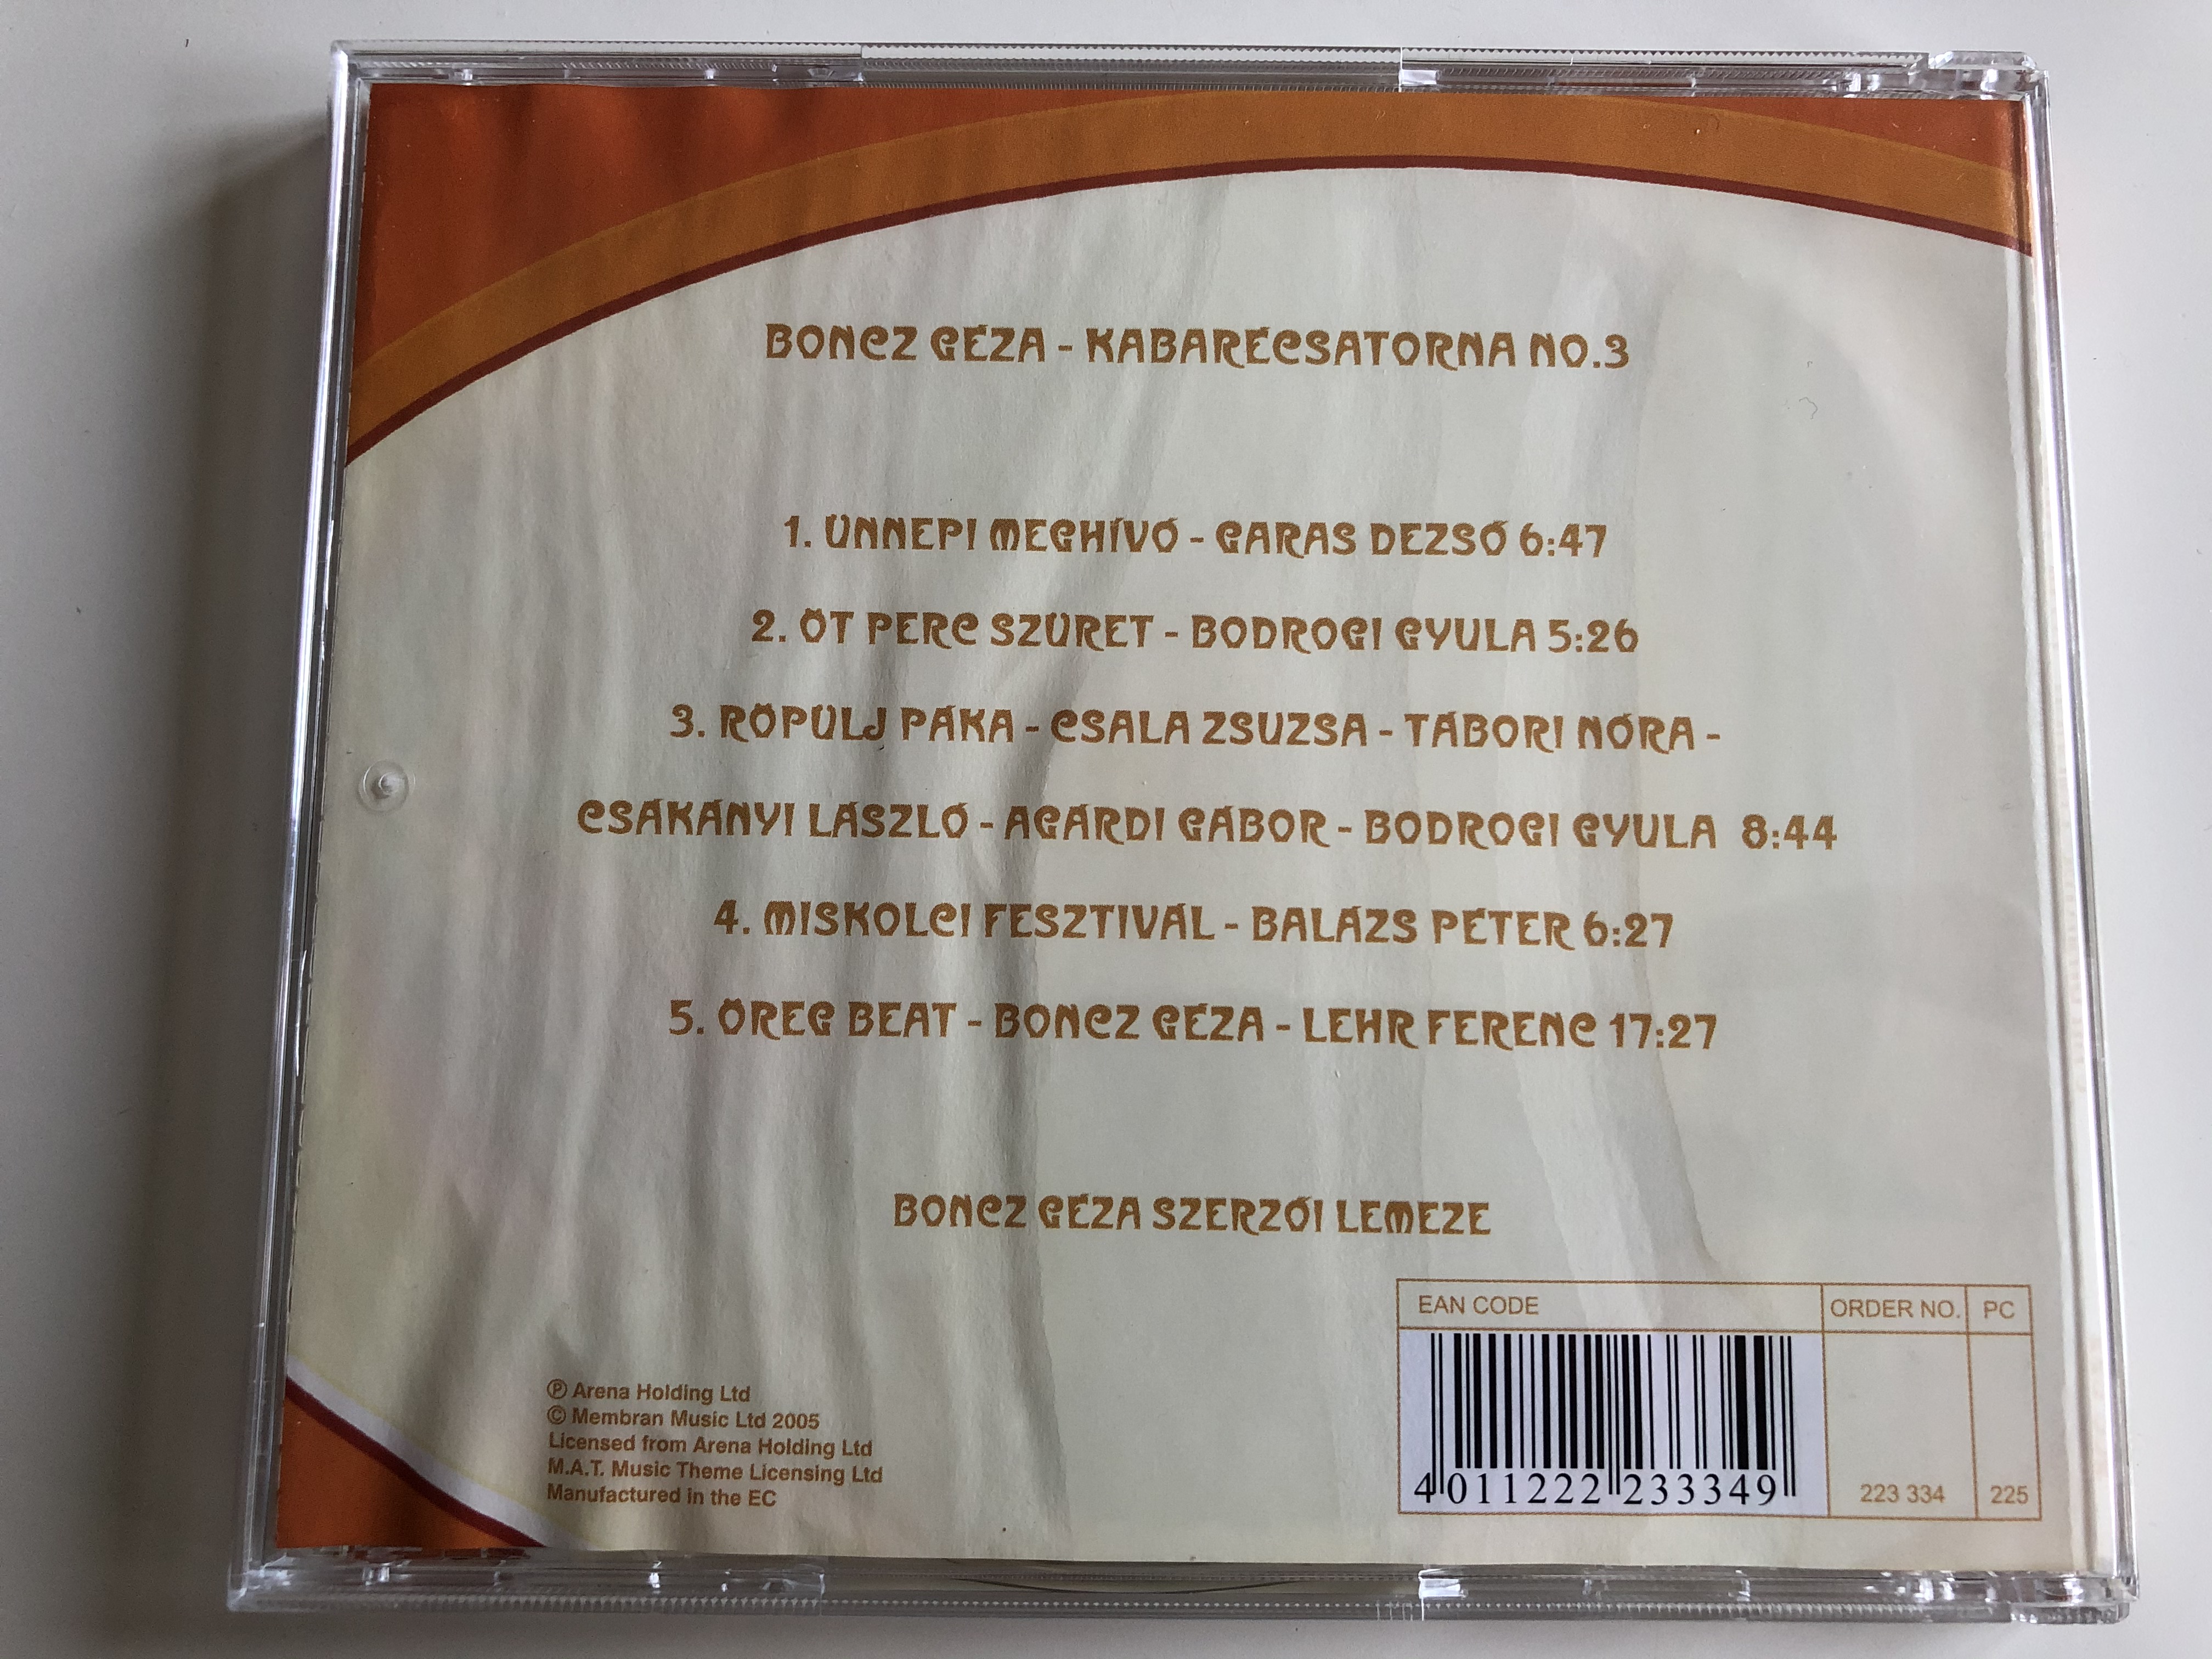 kabar-csatorna-no.-3-bones-geza-szerzoi-lemeze-kozremukodik-bodrogi-gyula-garas-dezso-csala-zsuzsa-csakanyi-laszlo-membran-music-audio-cd-2005-223-334-4-.jpg